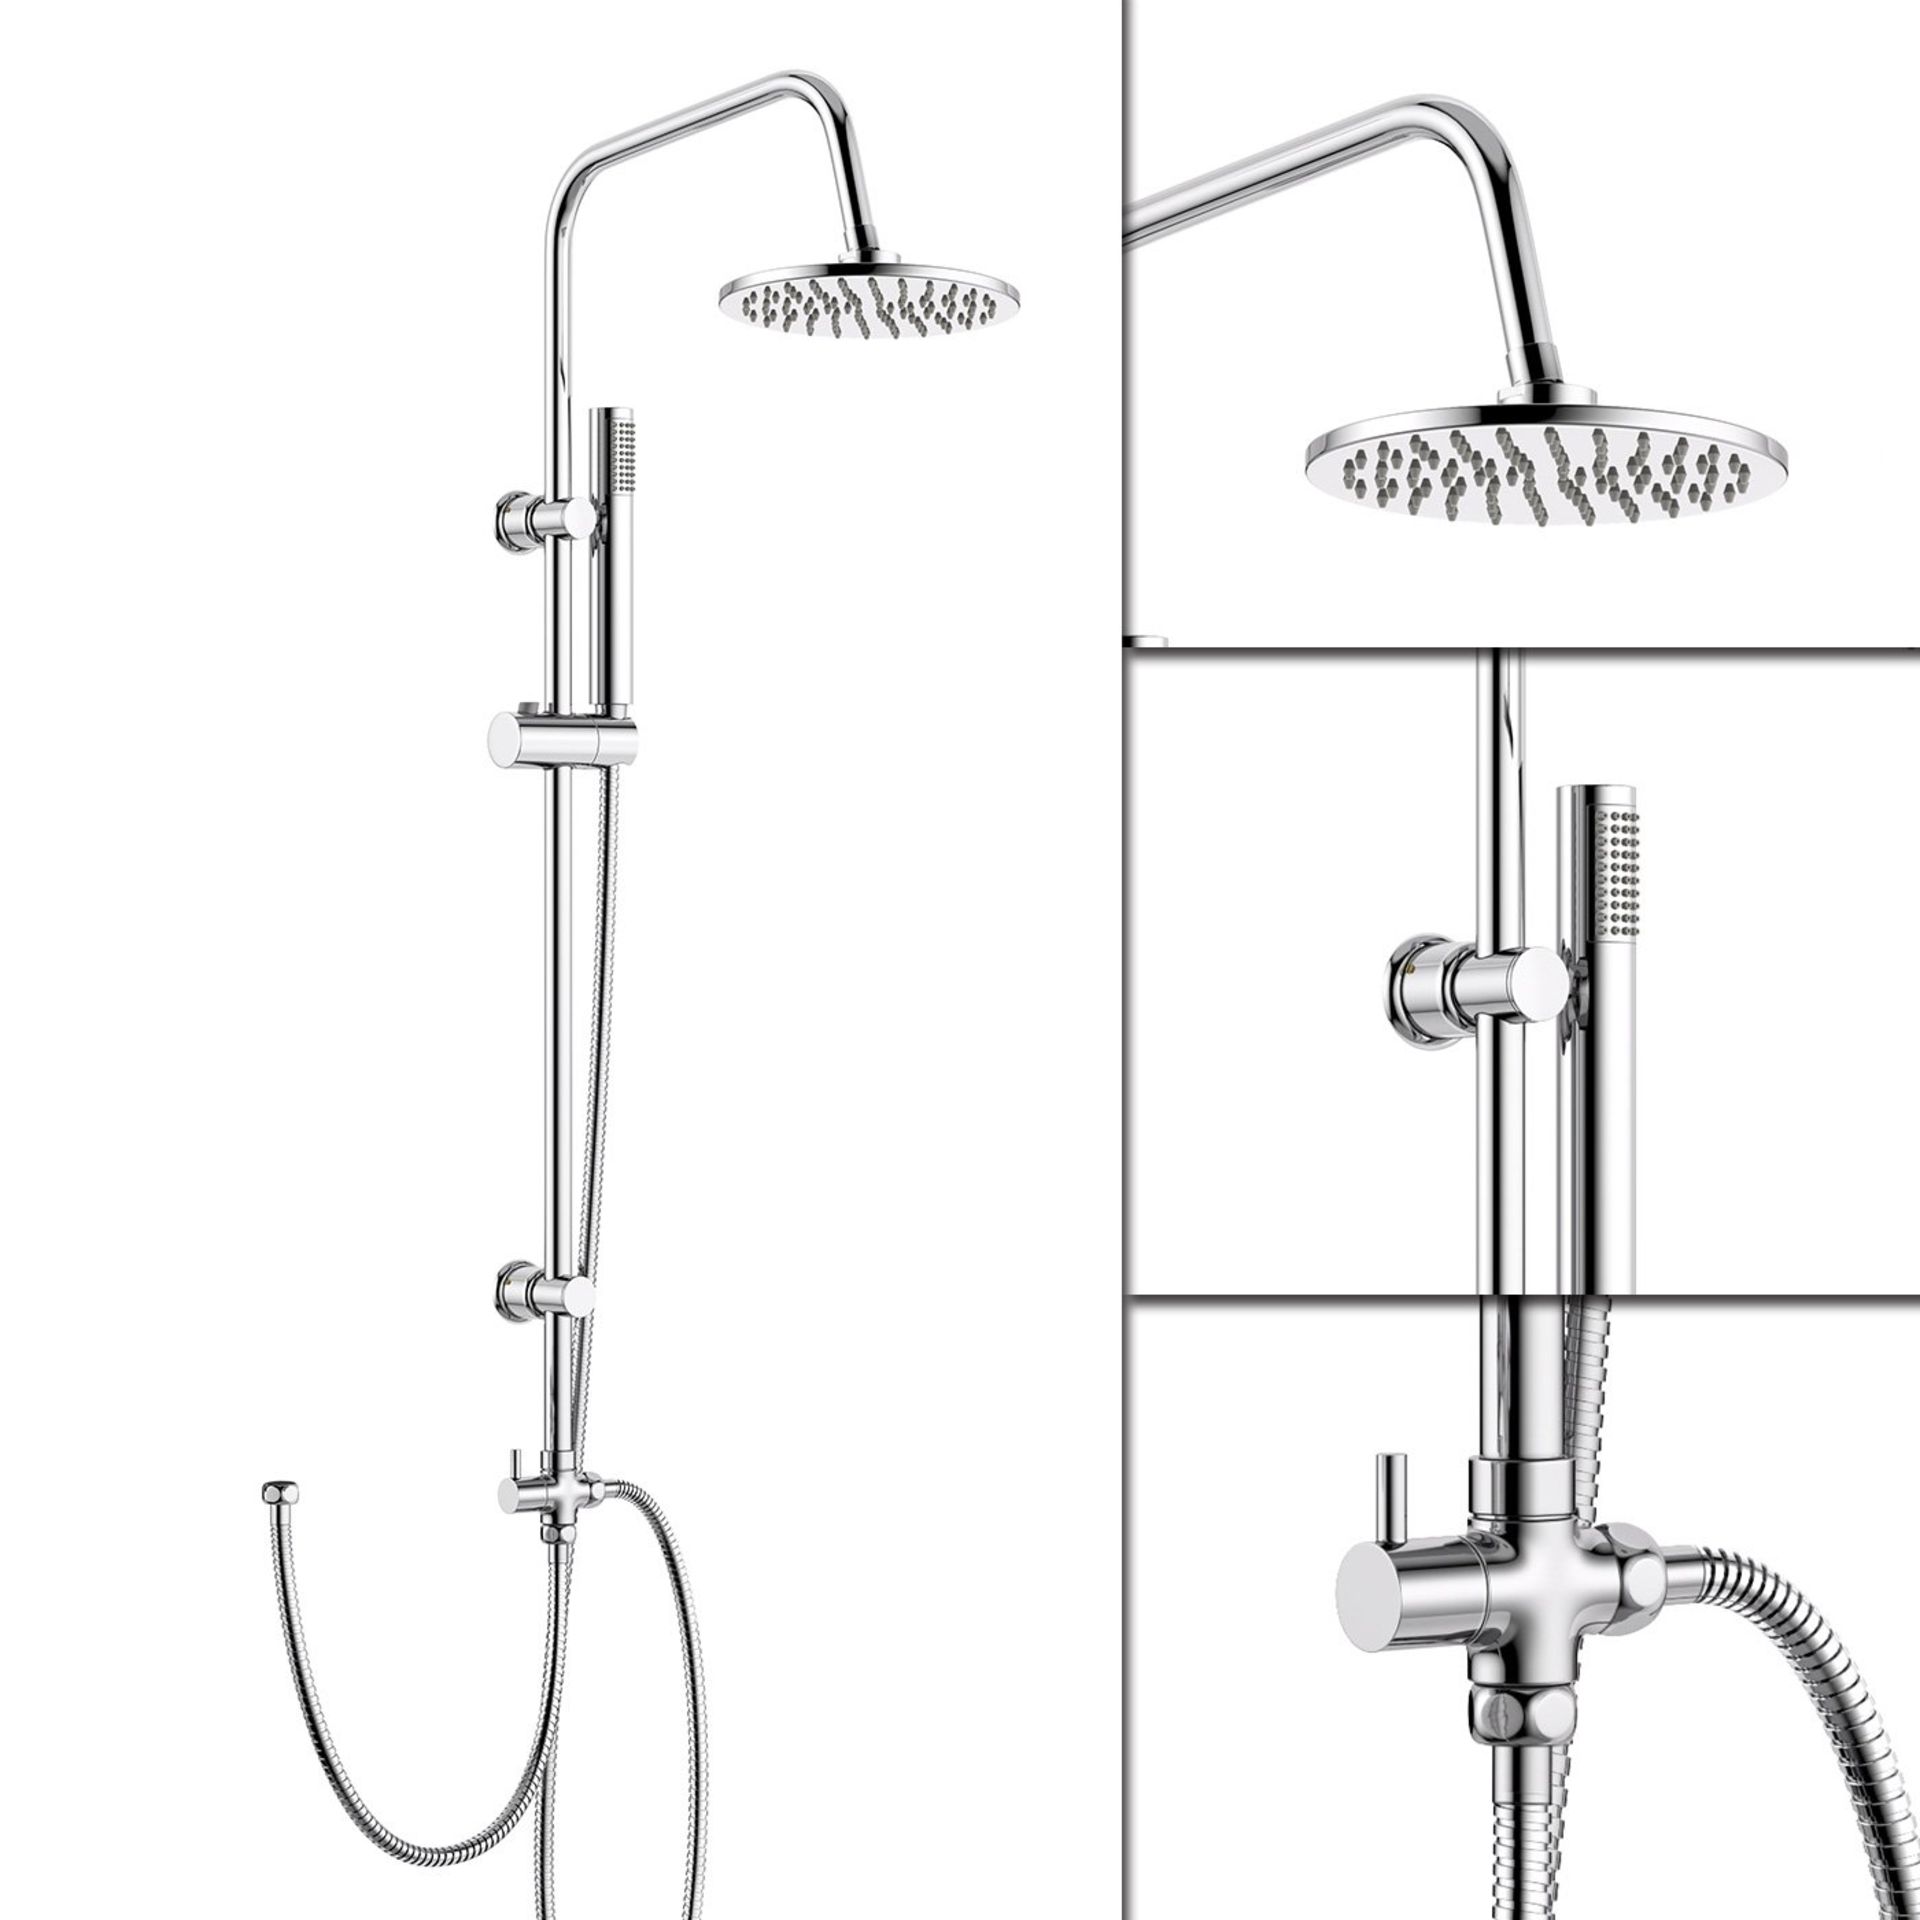 Modern Chrome Riser Rail Mixer Round Shower Head Kit for Bath Tap. Chrome effect finish Latest... - Image 4 of 6